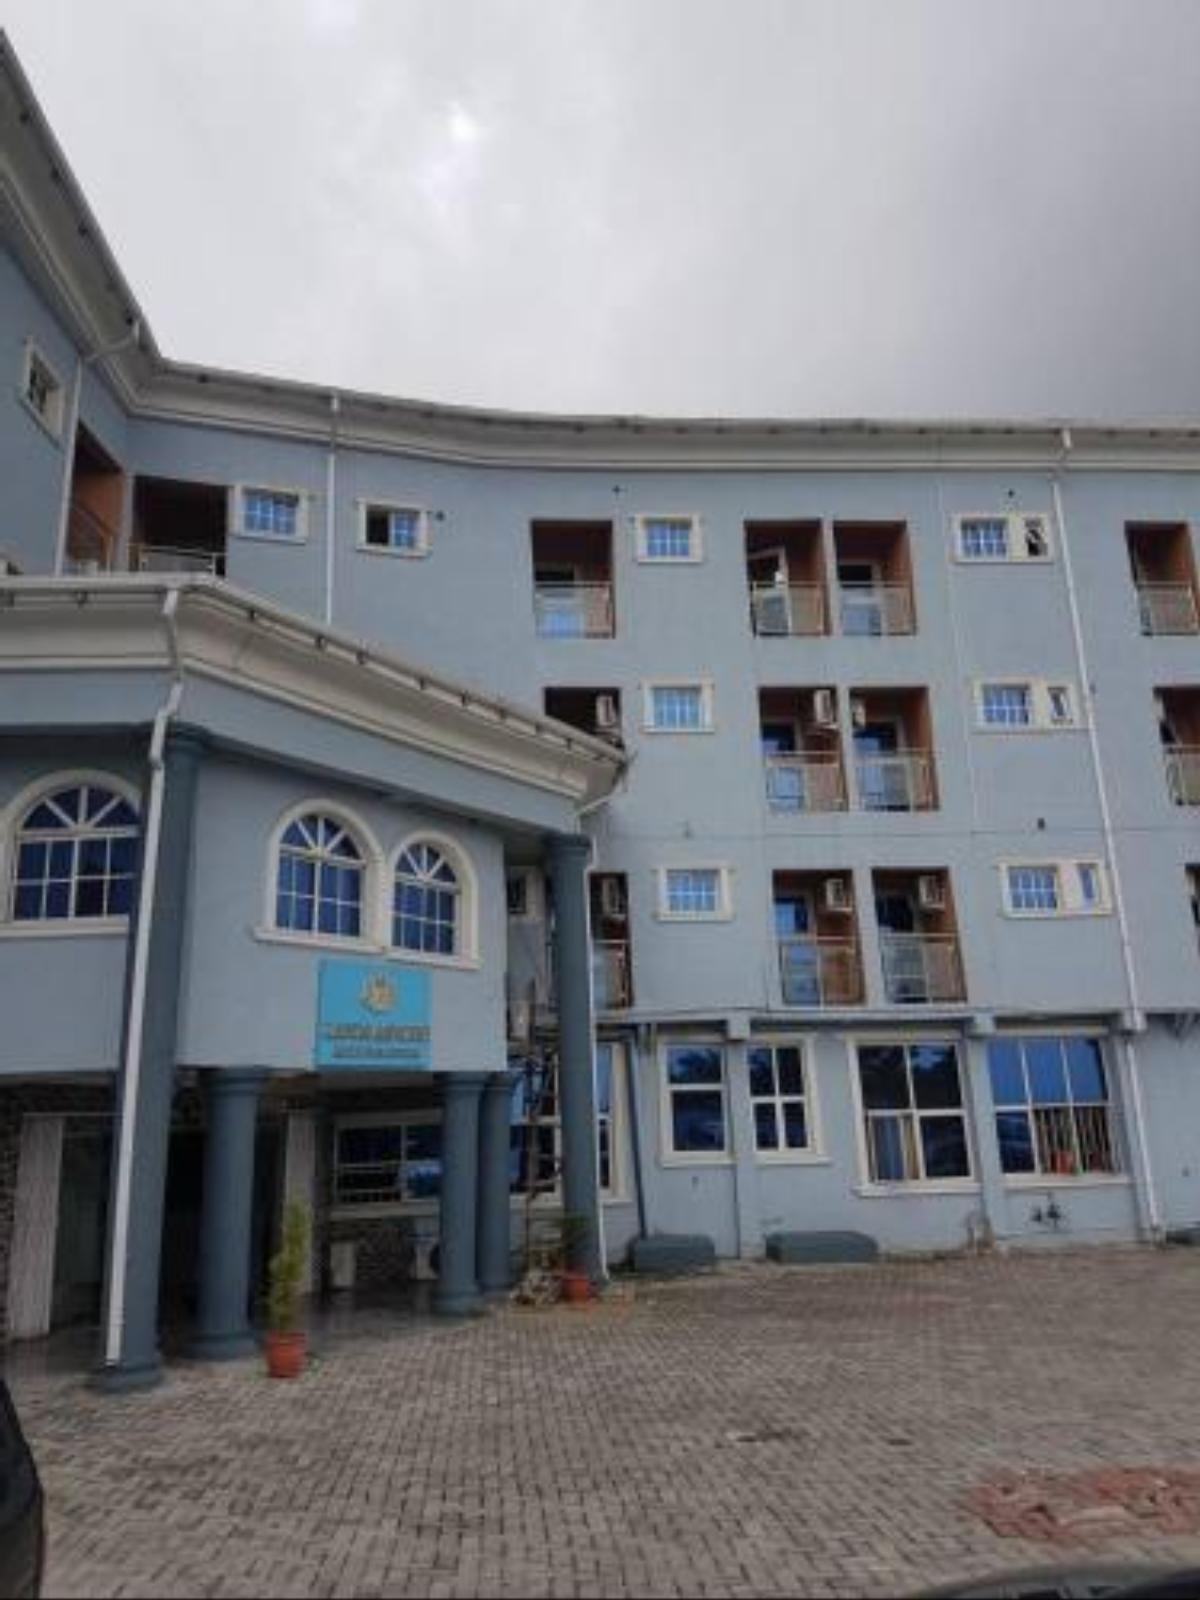 Ohonba Royal Hotel Hotel Lekki Nigeria